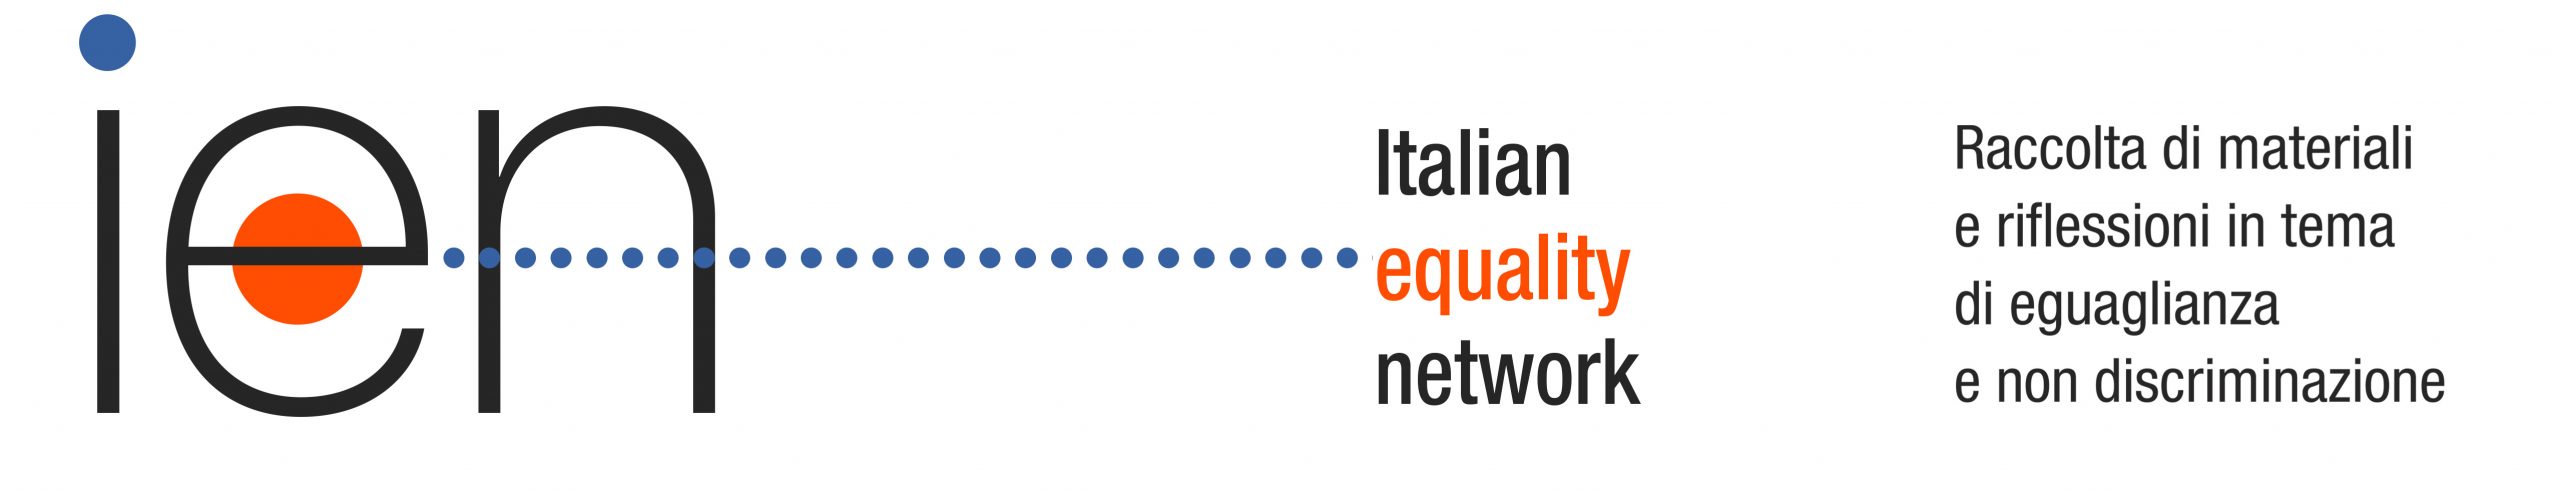 Italian Equality Network